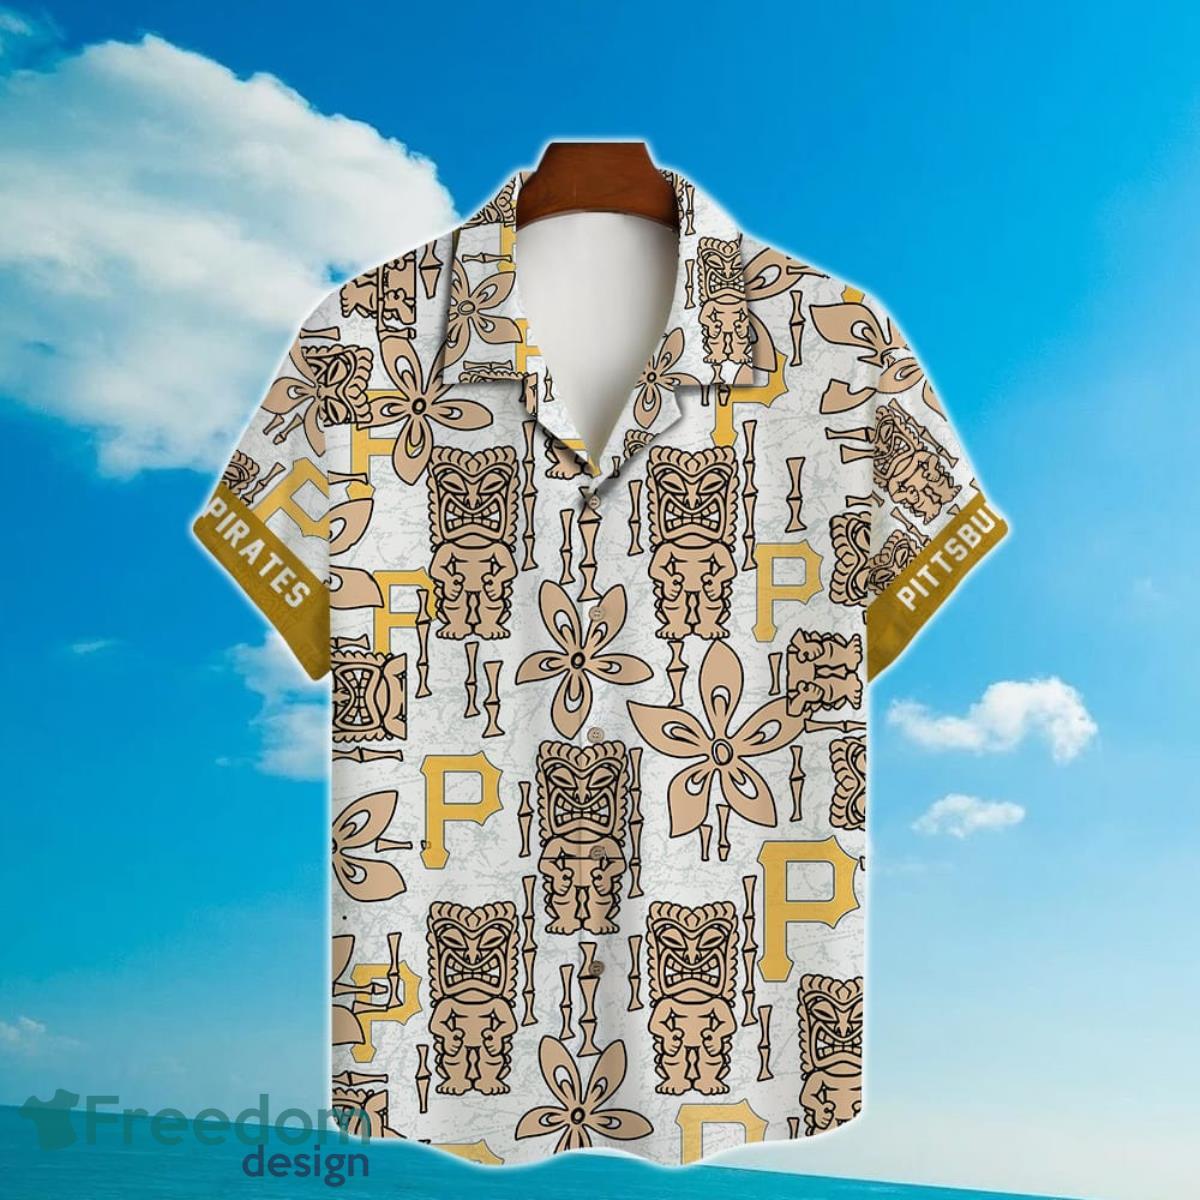 Pittsburgh Pirates Hawaiian Shirt For Men And Women